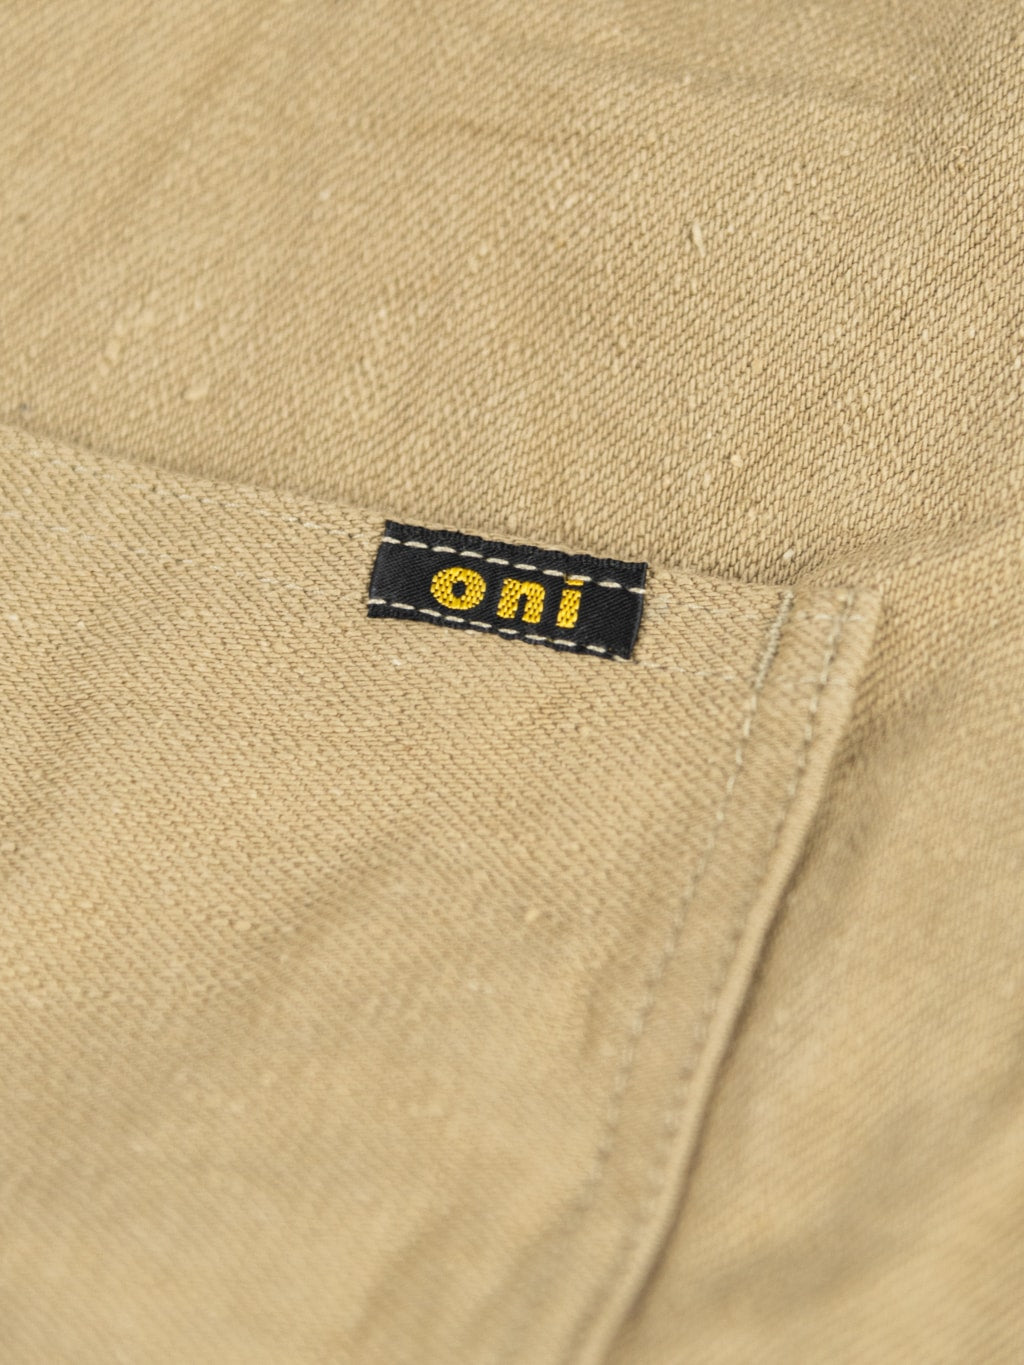 ONI Denim 03501 Sulfur Coverall Jacket Khaki Beige brand label tag